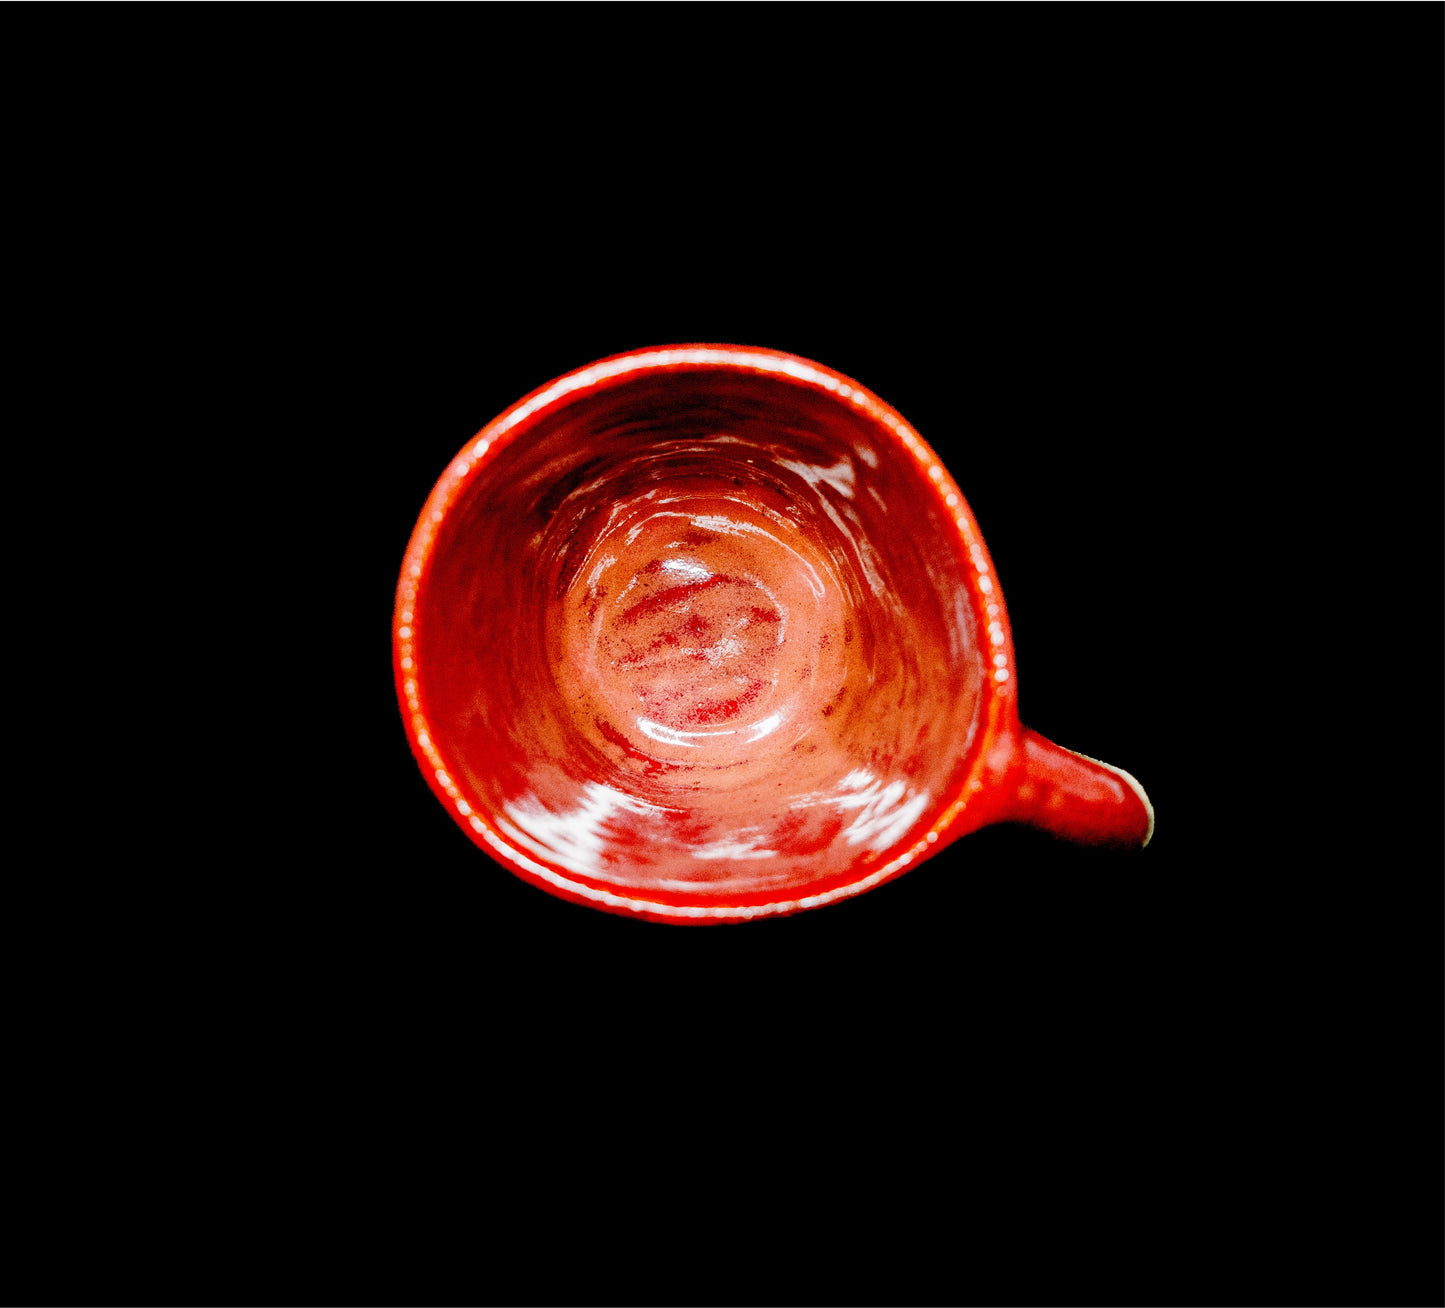 Textured Coffee Mug #004